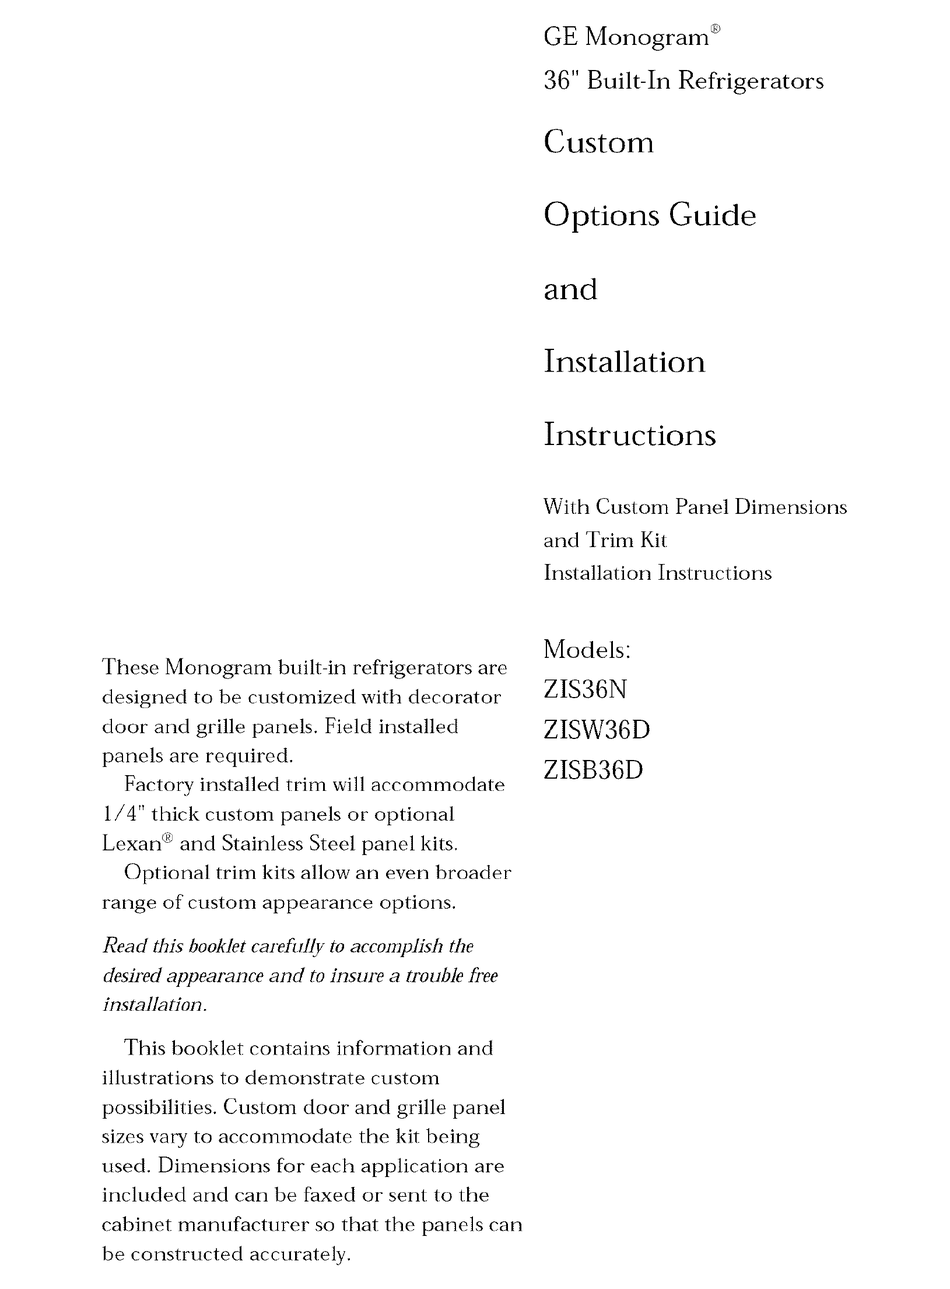 ge-monogram-zet1r-owner-s-manual-pdf-download-manualslib